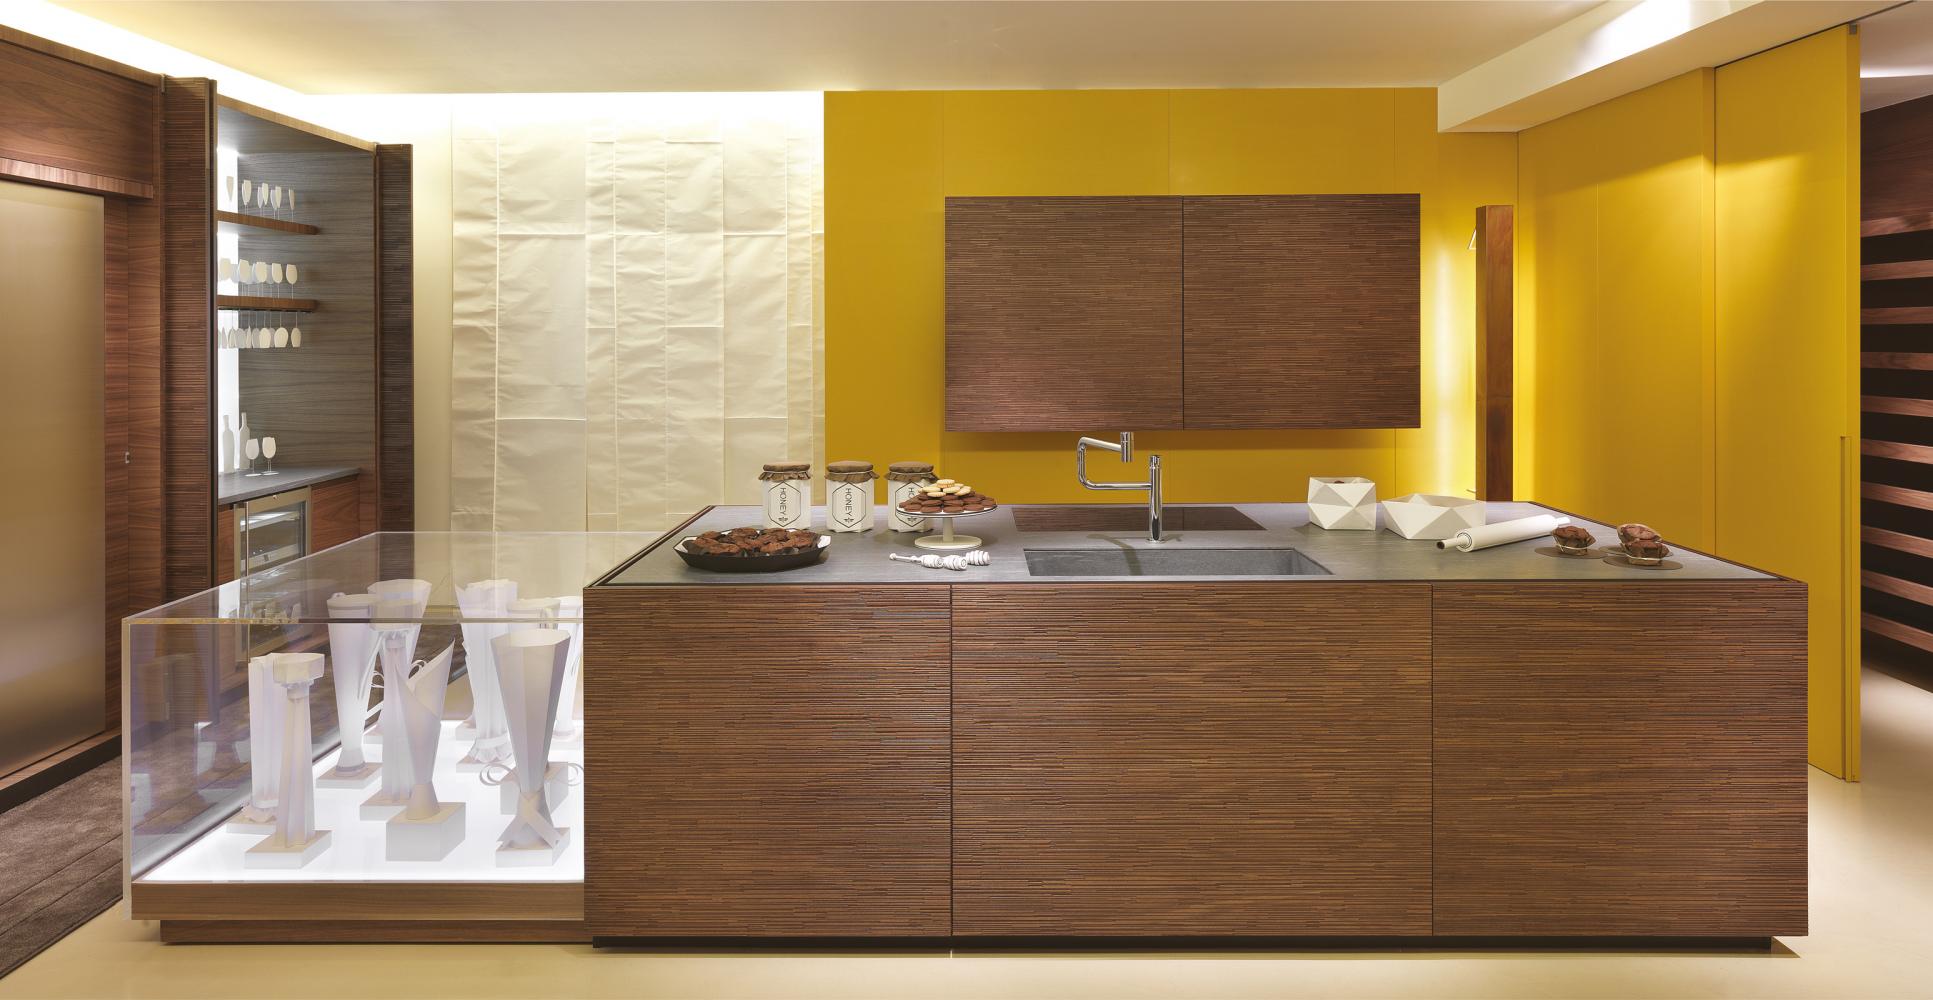 Bespoke luxury modern kitchen in carved wood